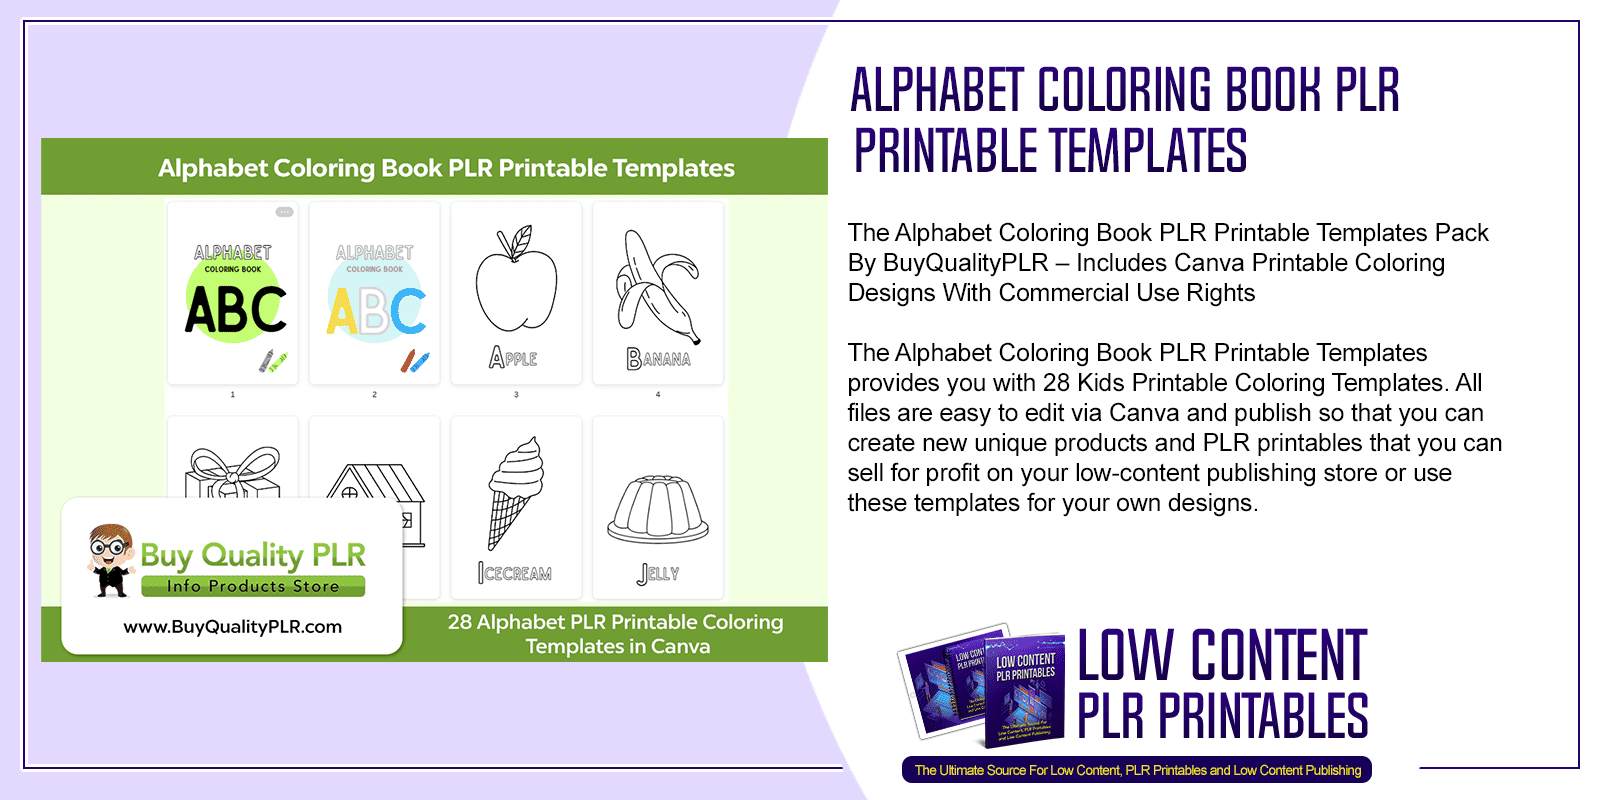 Alphabet Coloring Book PLR Printable Templates